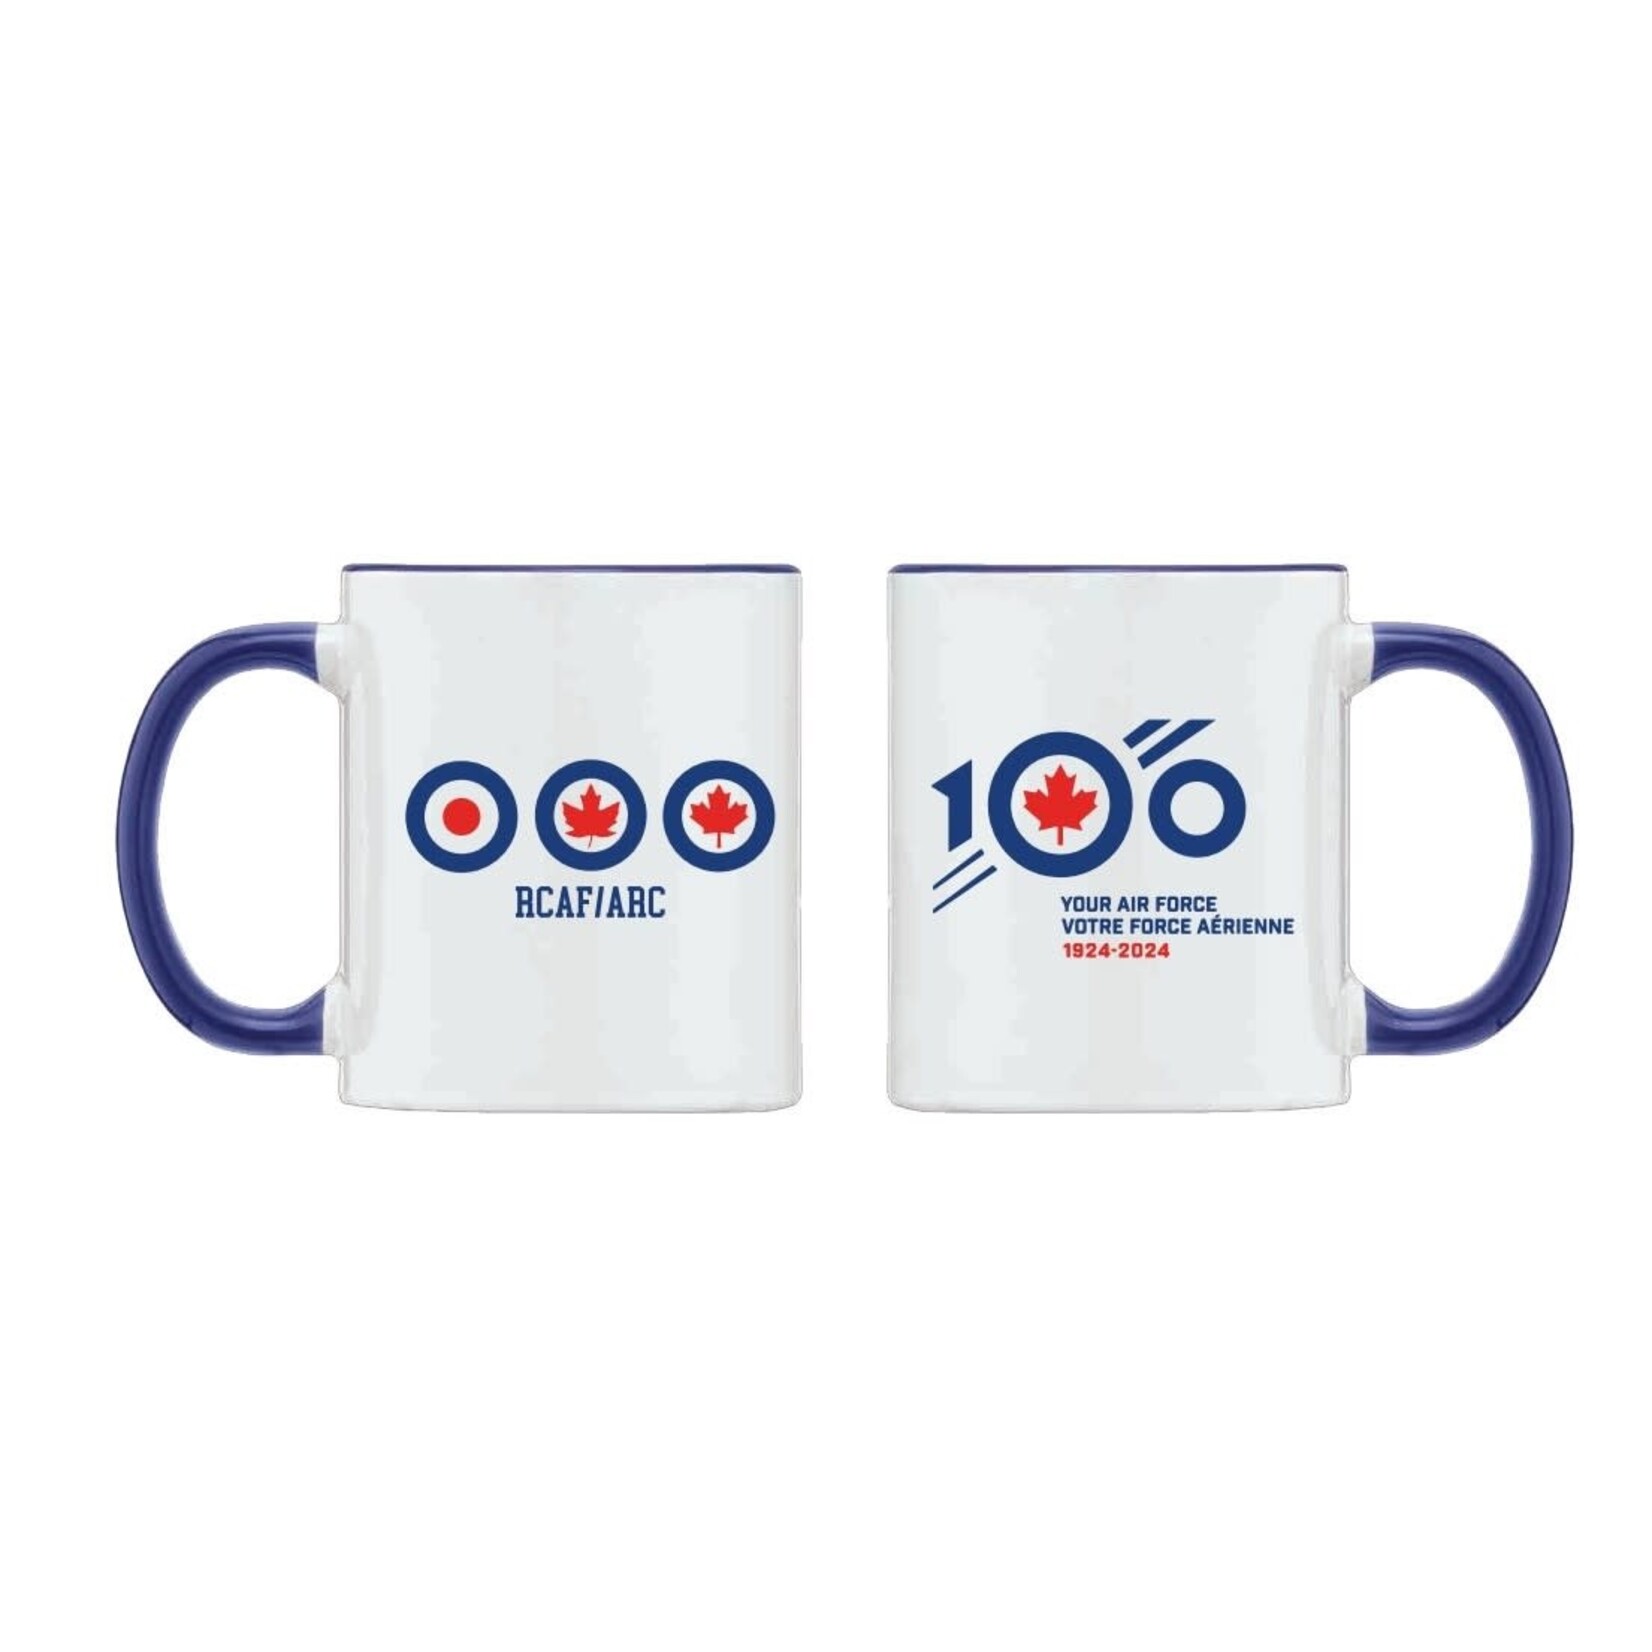 Aviation and Space RCAF 100 Mug